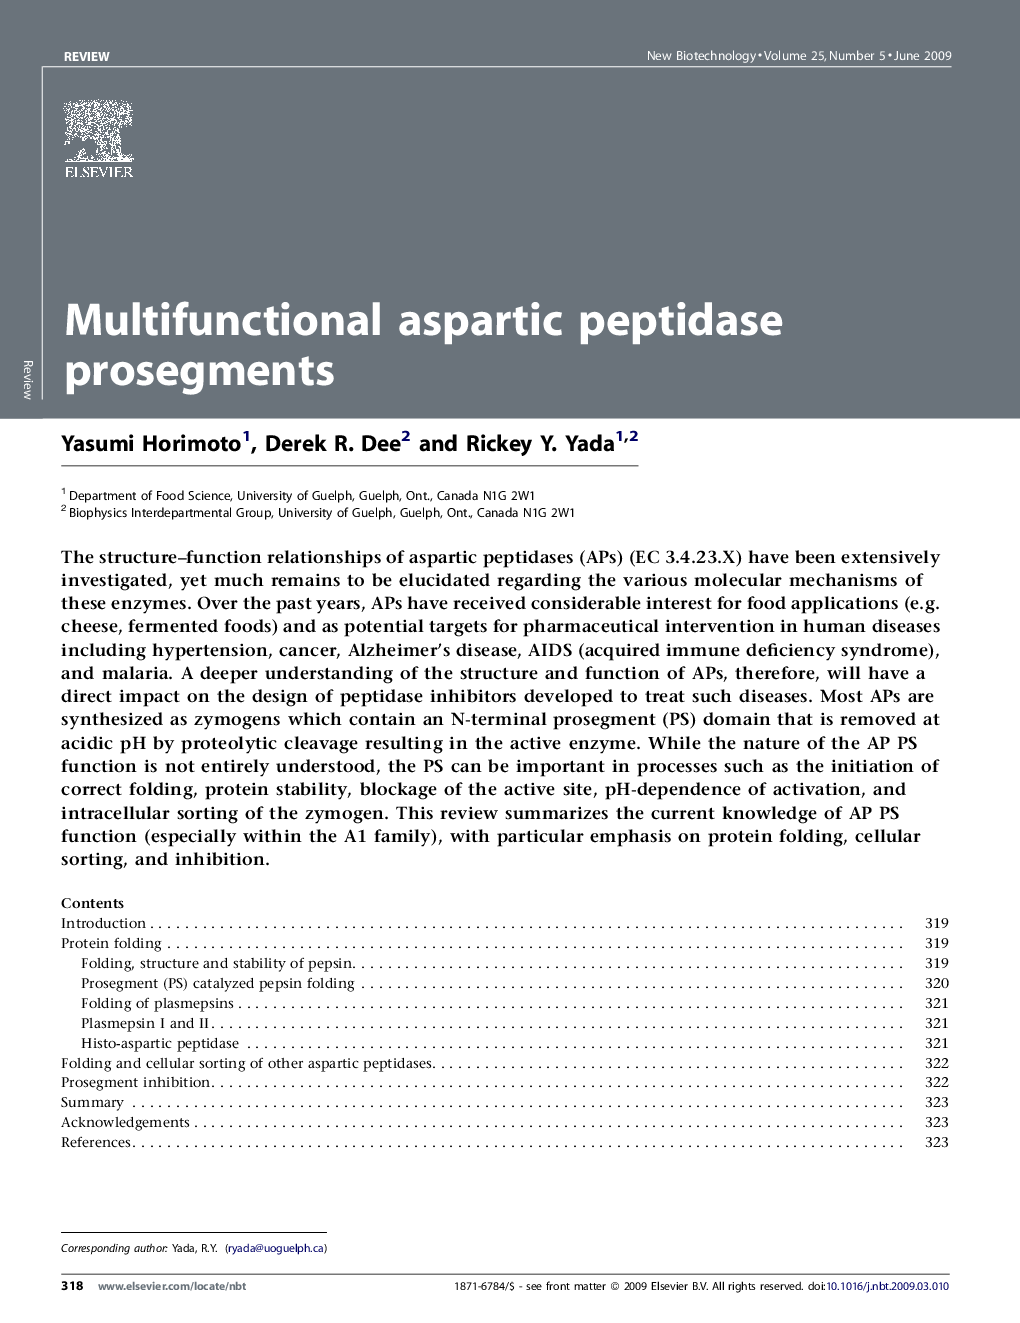 Multifunctional aspartic peptidase prosegments